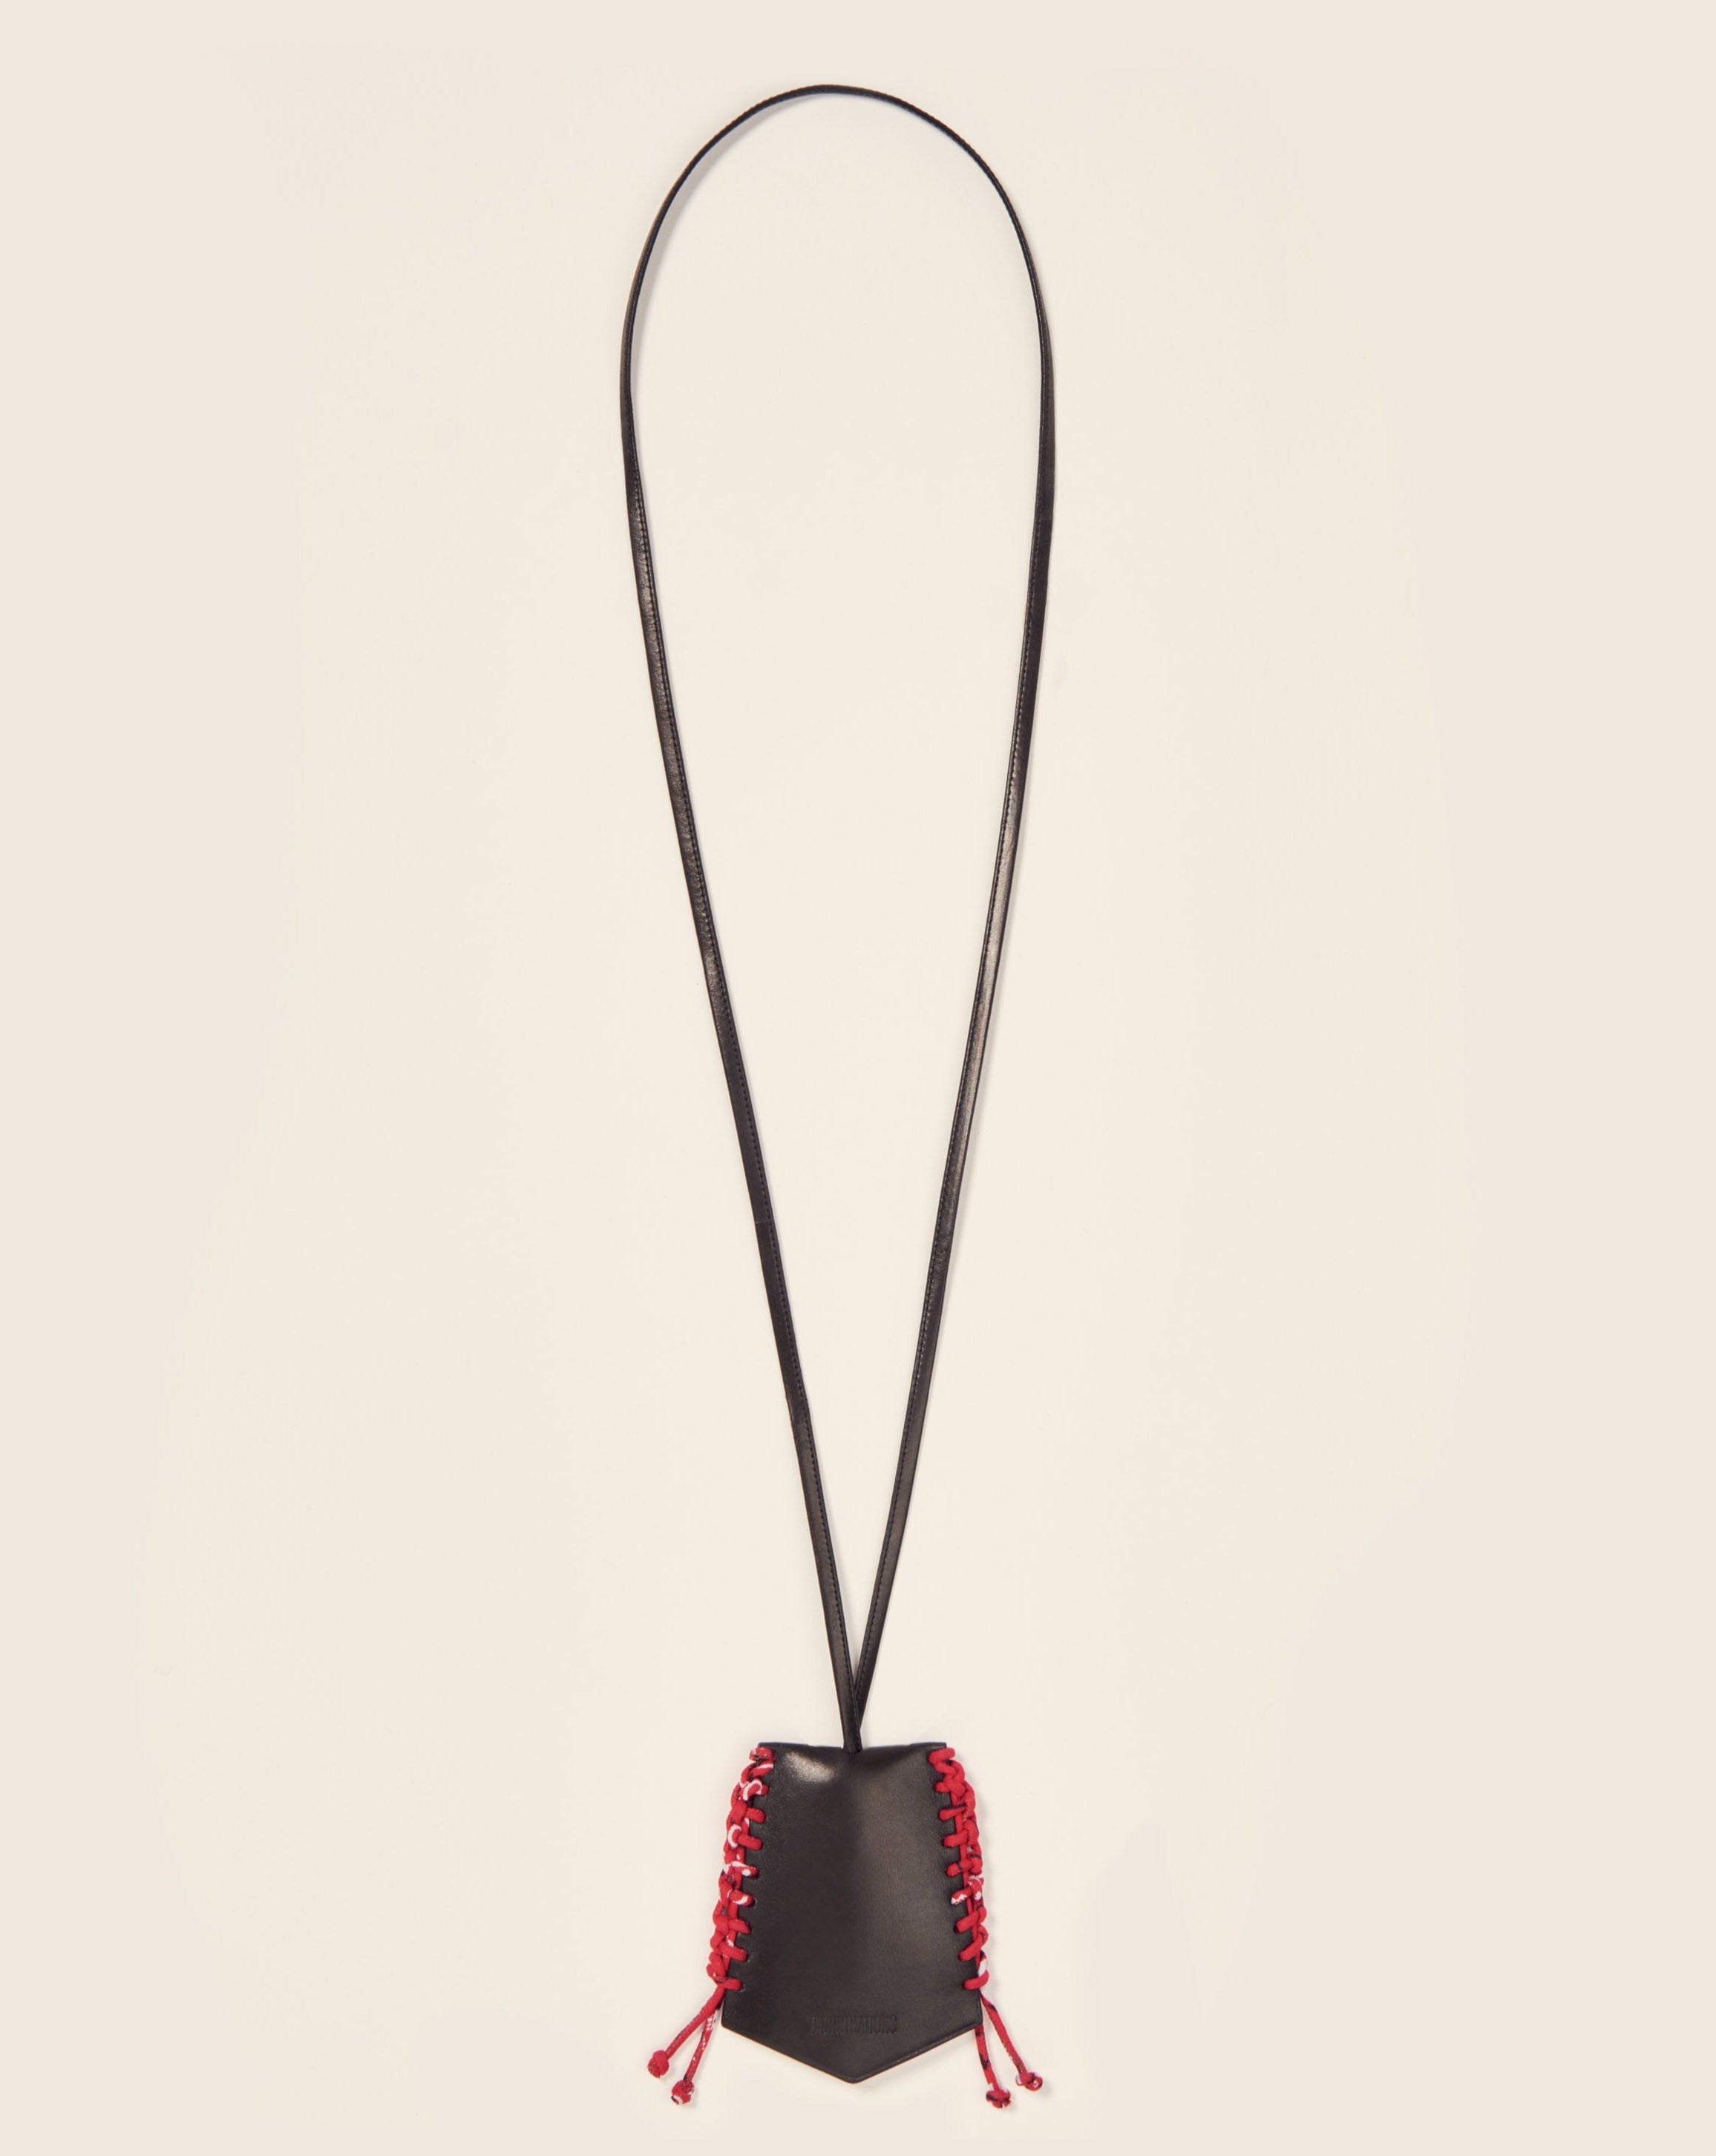 FUJI - Bell key ring necklace - Black leather & Bandana Red